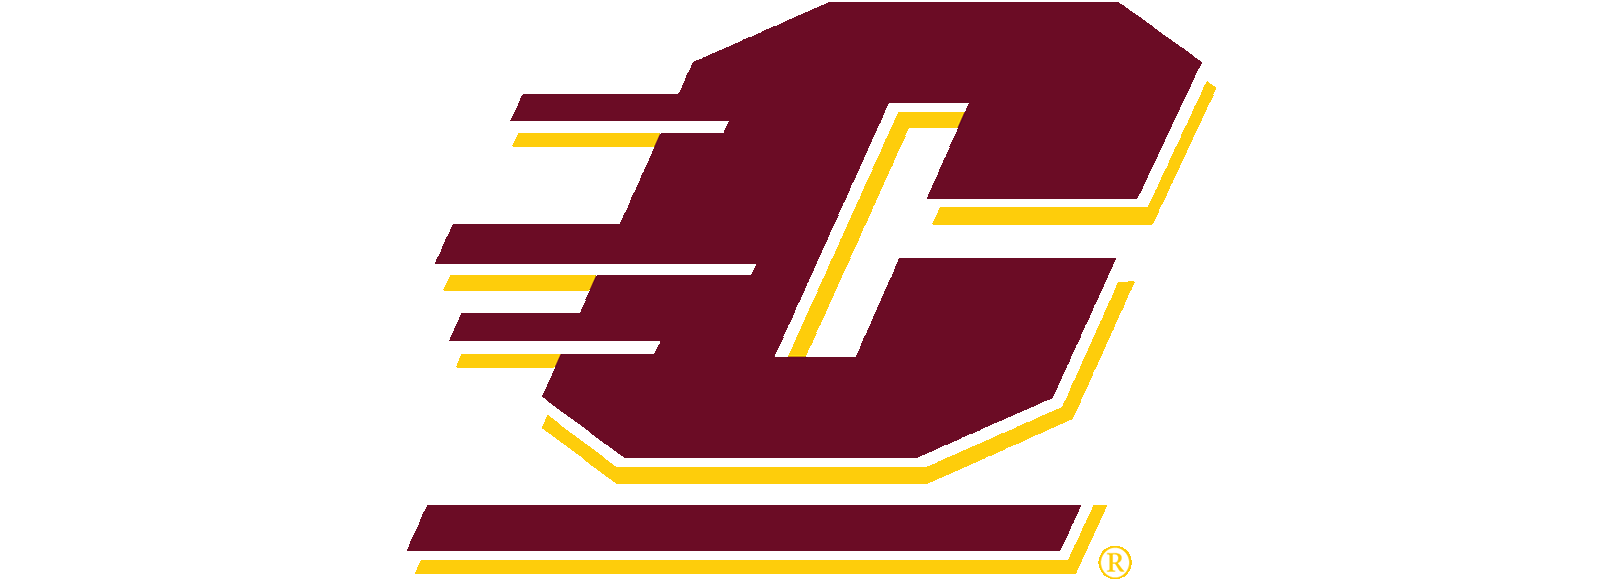 Central Michigan University logo.